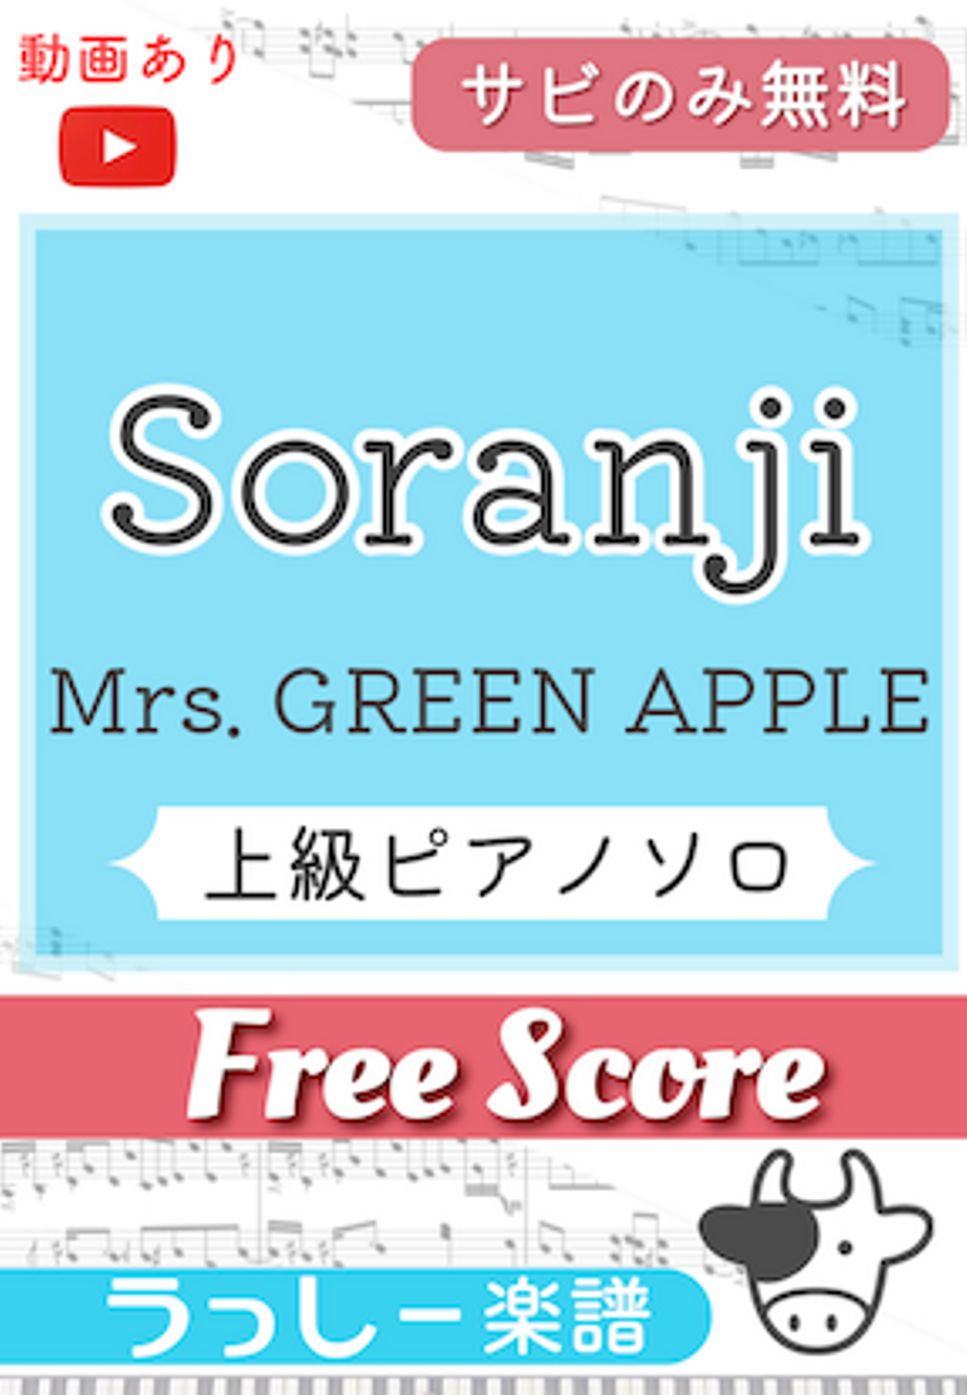 Mrs. GREEN APPLE - Soranji (サビのみ無料) by 牛武奏人